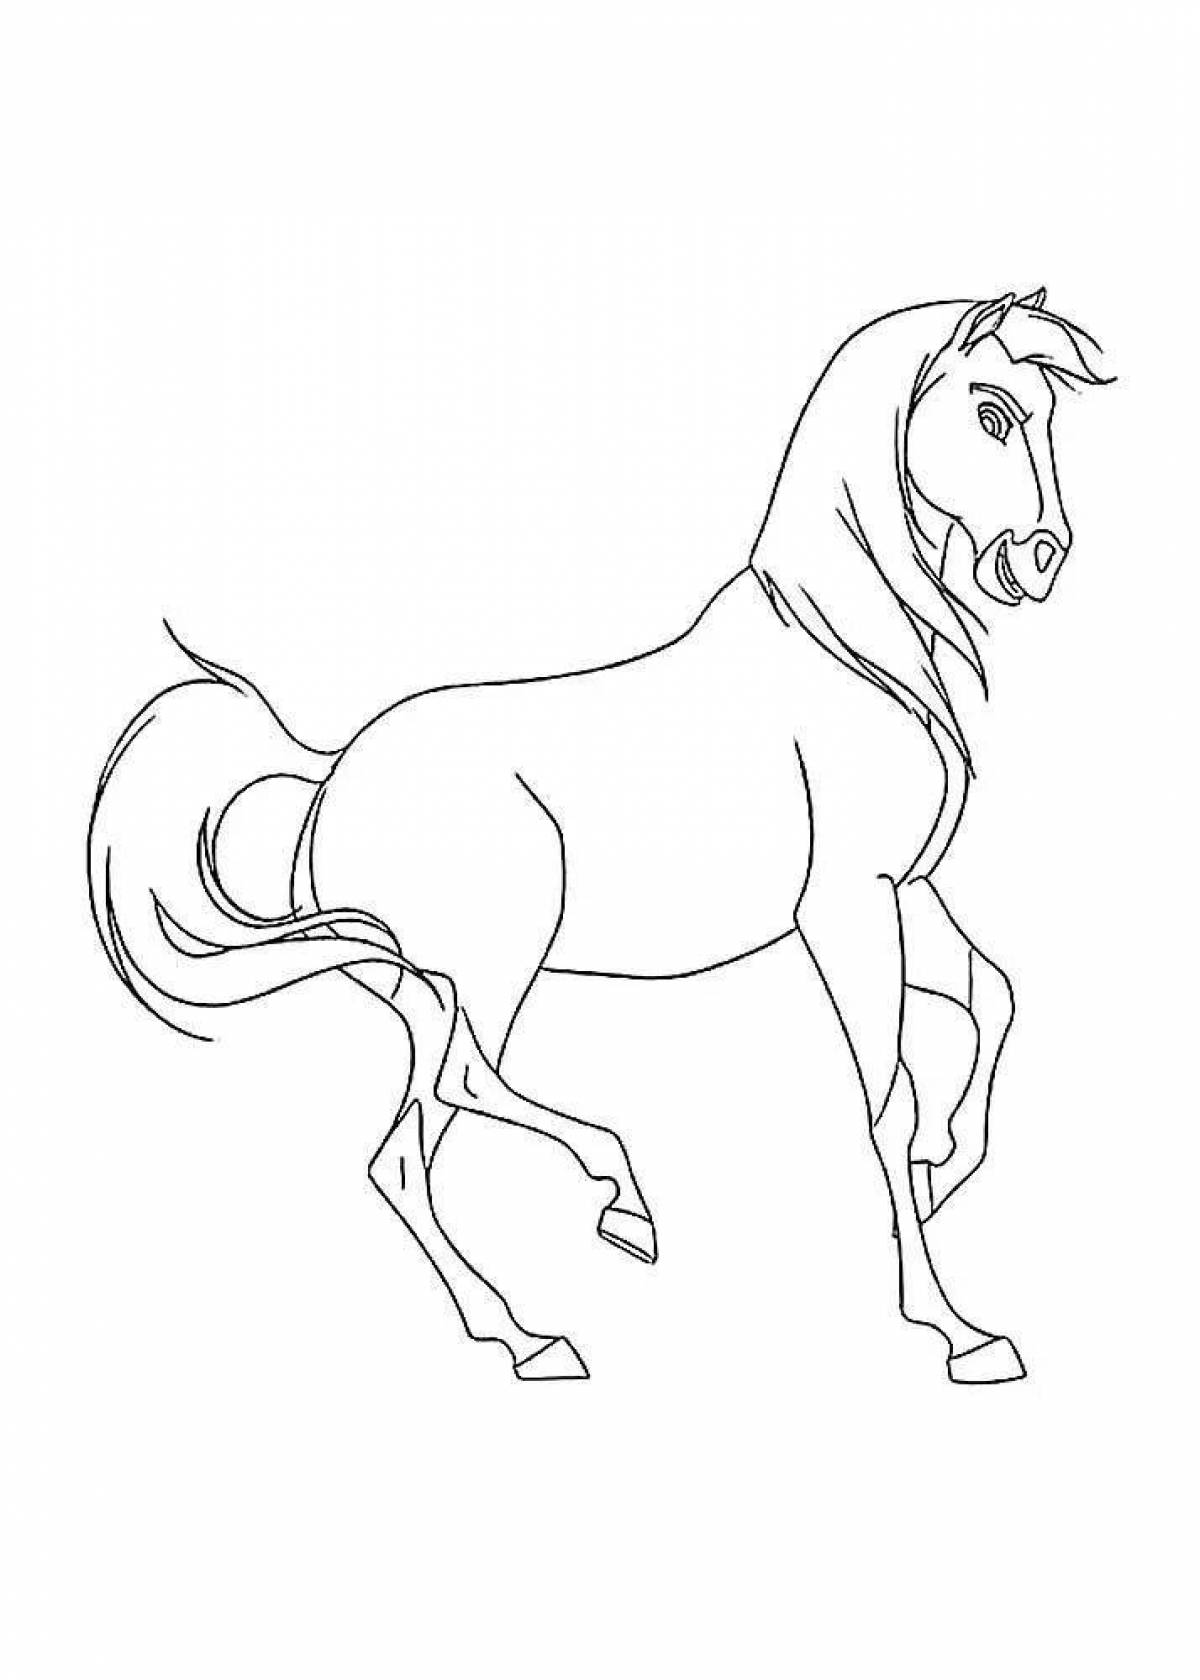 Coloring page joyful lanky horse